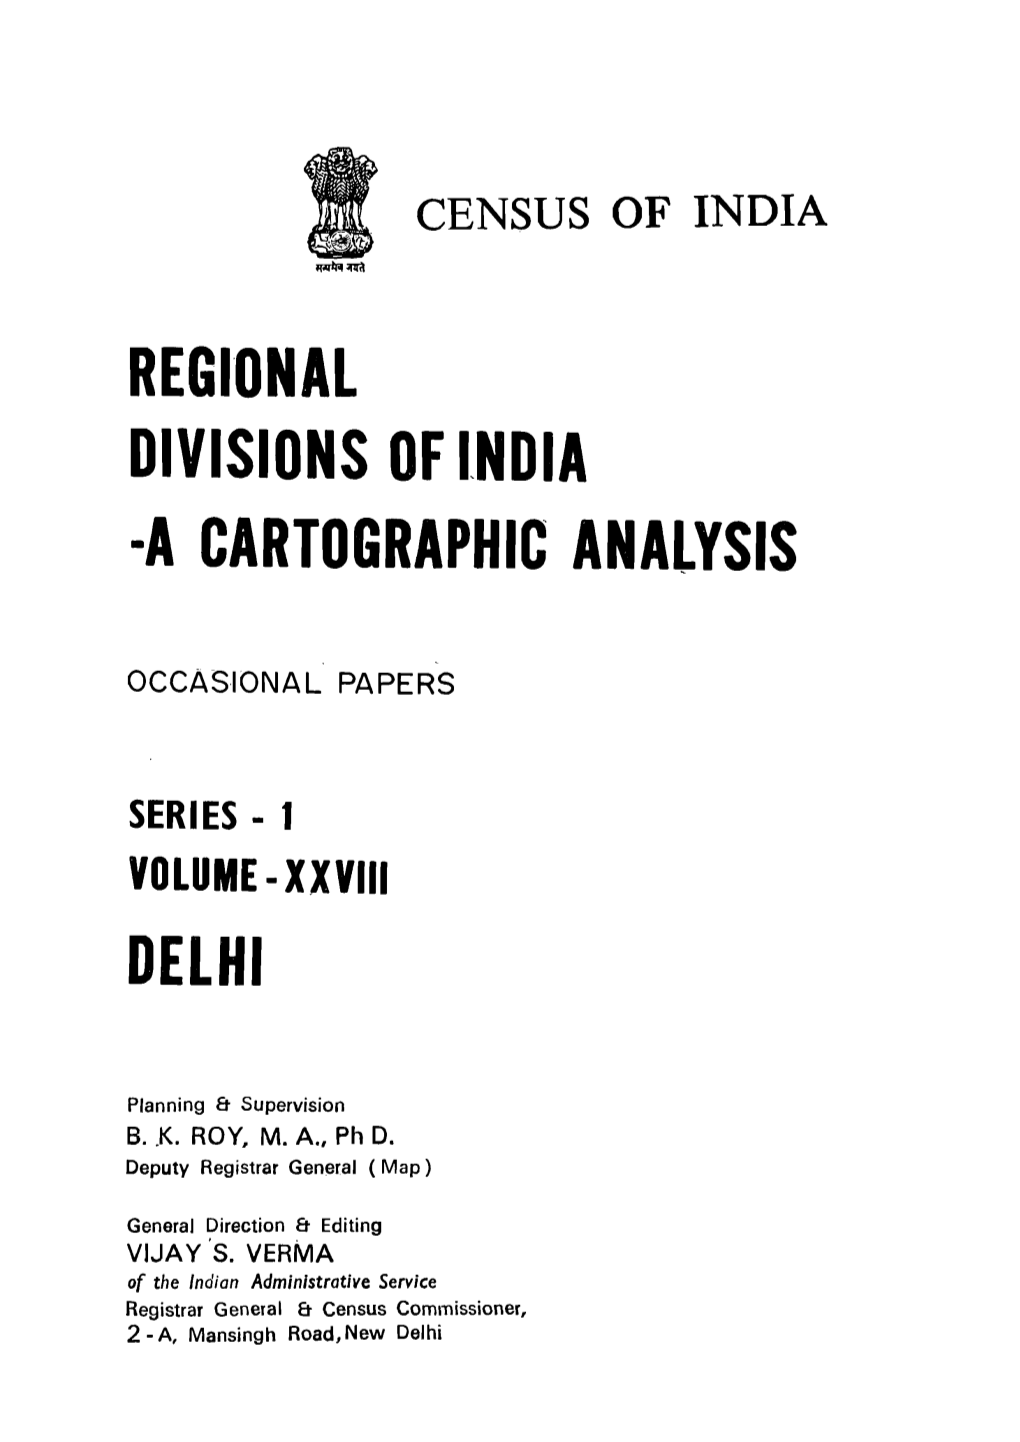 Regional Divisions of India a Cartographic Anaysis, Vol-XXVIII, Series-1, Delhi